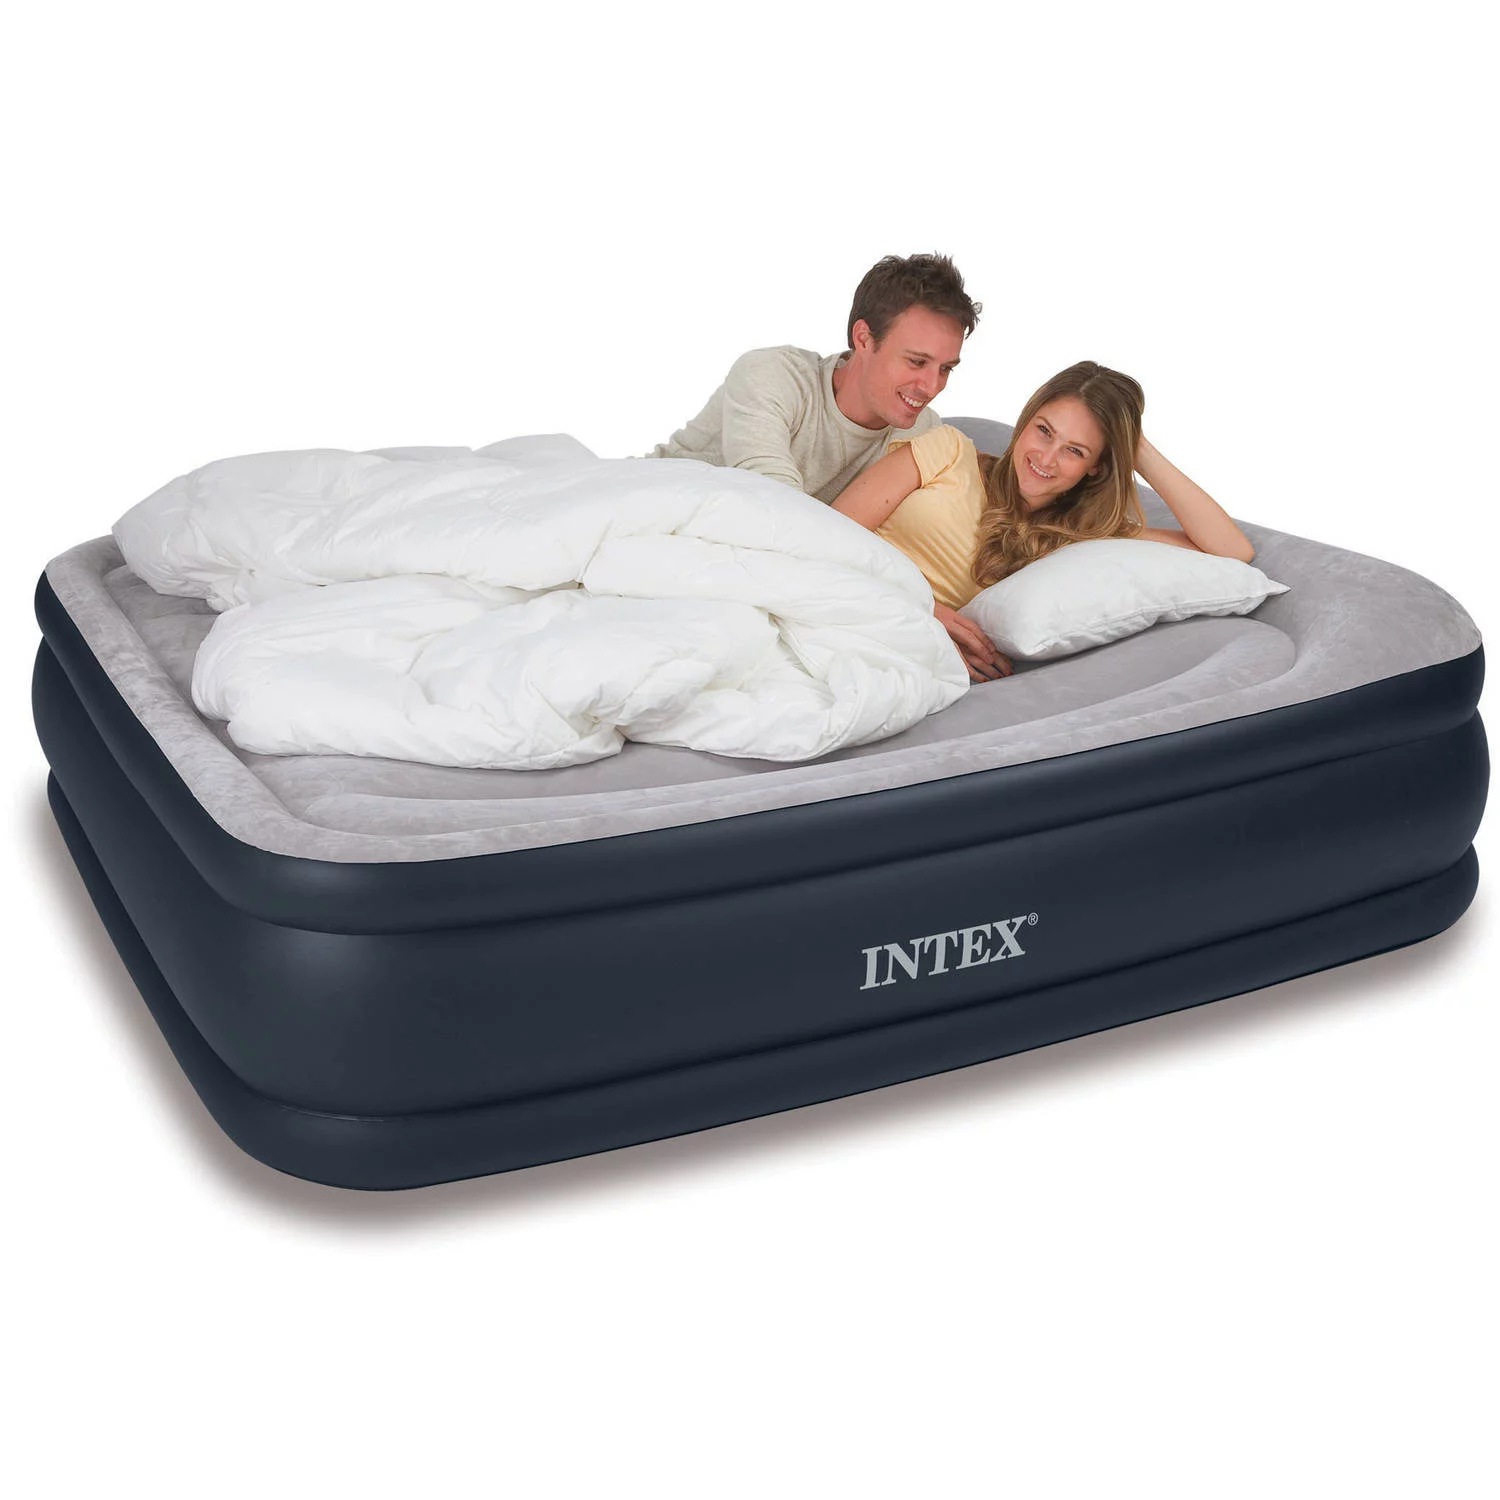 Details about  / Intex Queen Comfort High Rise Airbed Mattress w// Built In Pump /& Cordless Pump